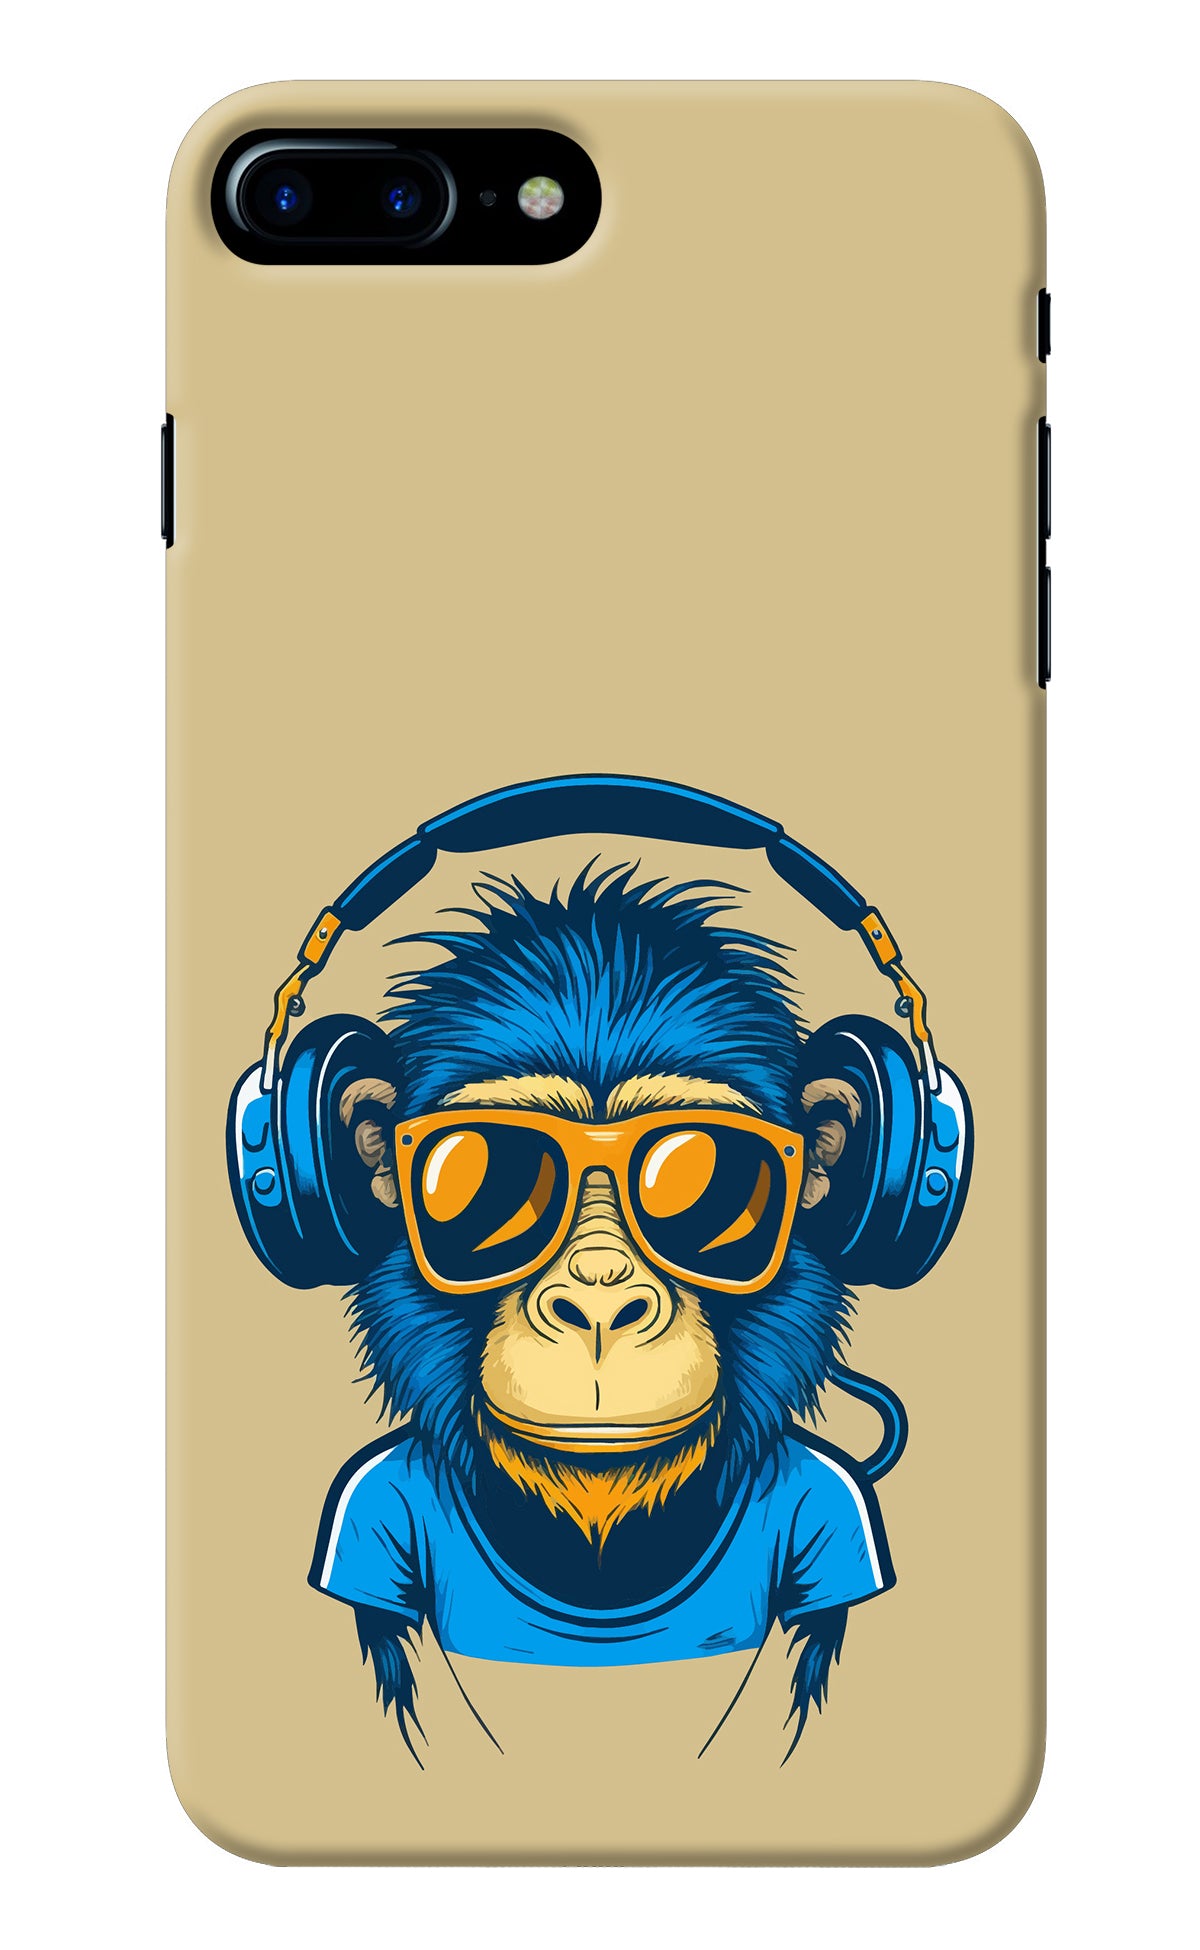 Monkey Headphone iPhone 7 Plus Back Cover